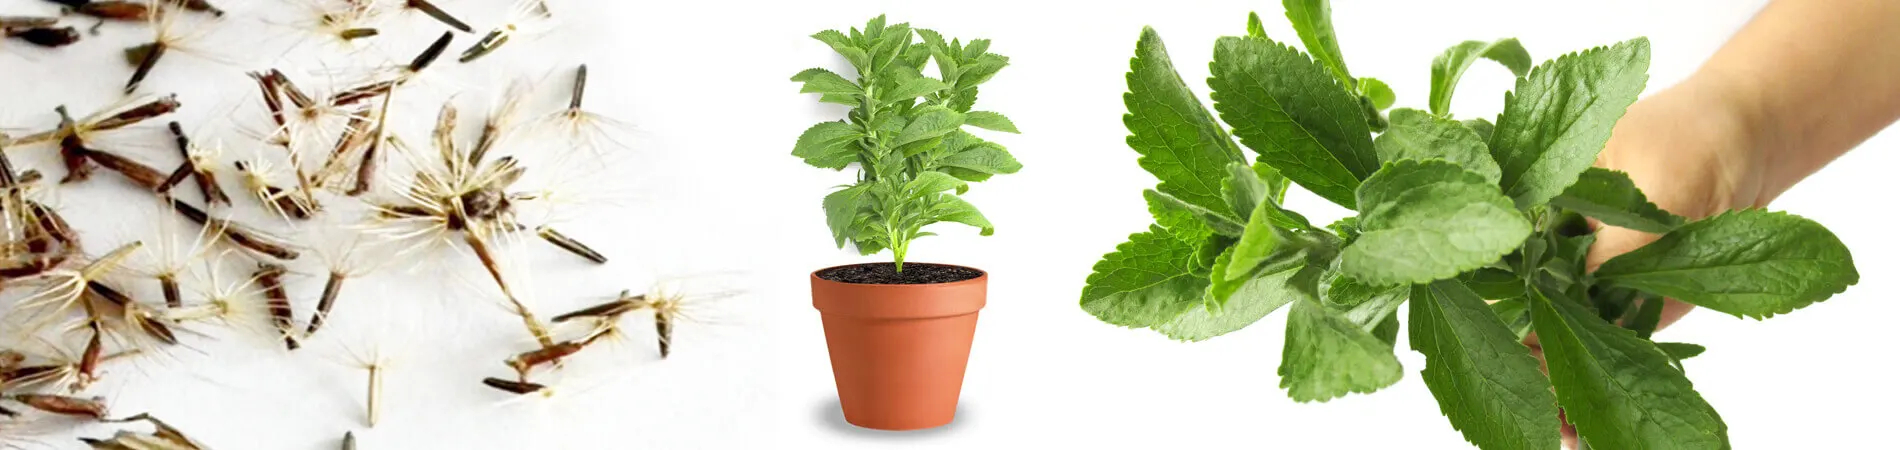 Can you grow stevia yourself? Buy Stevia Seeds.